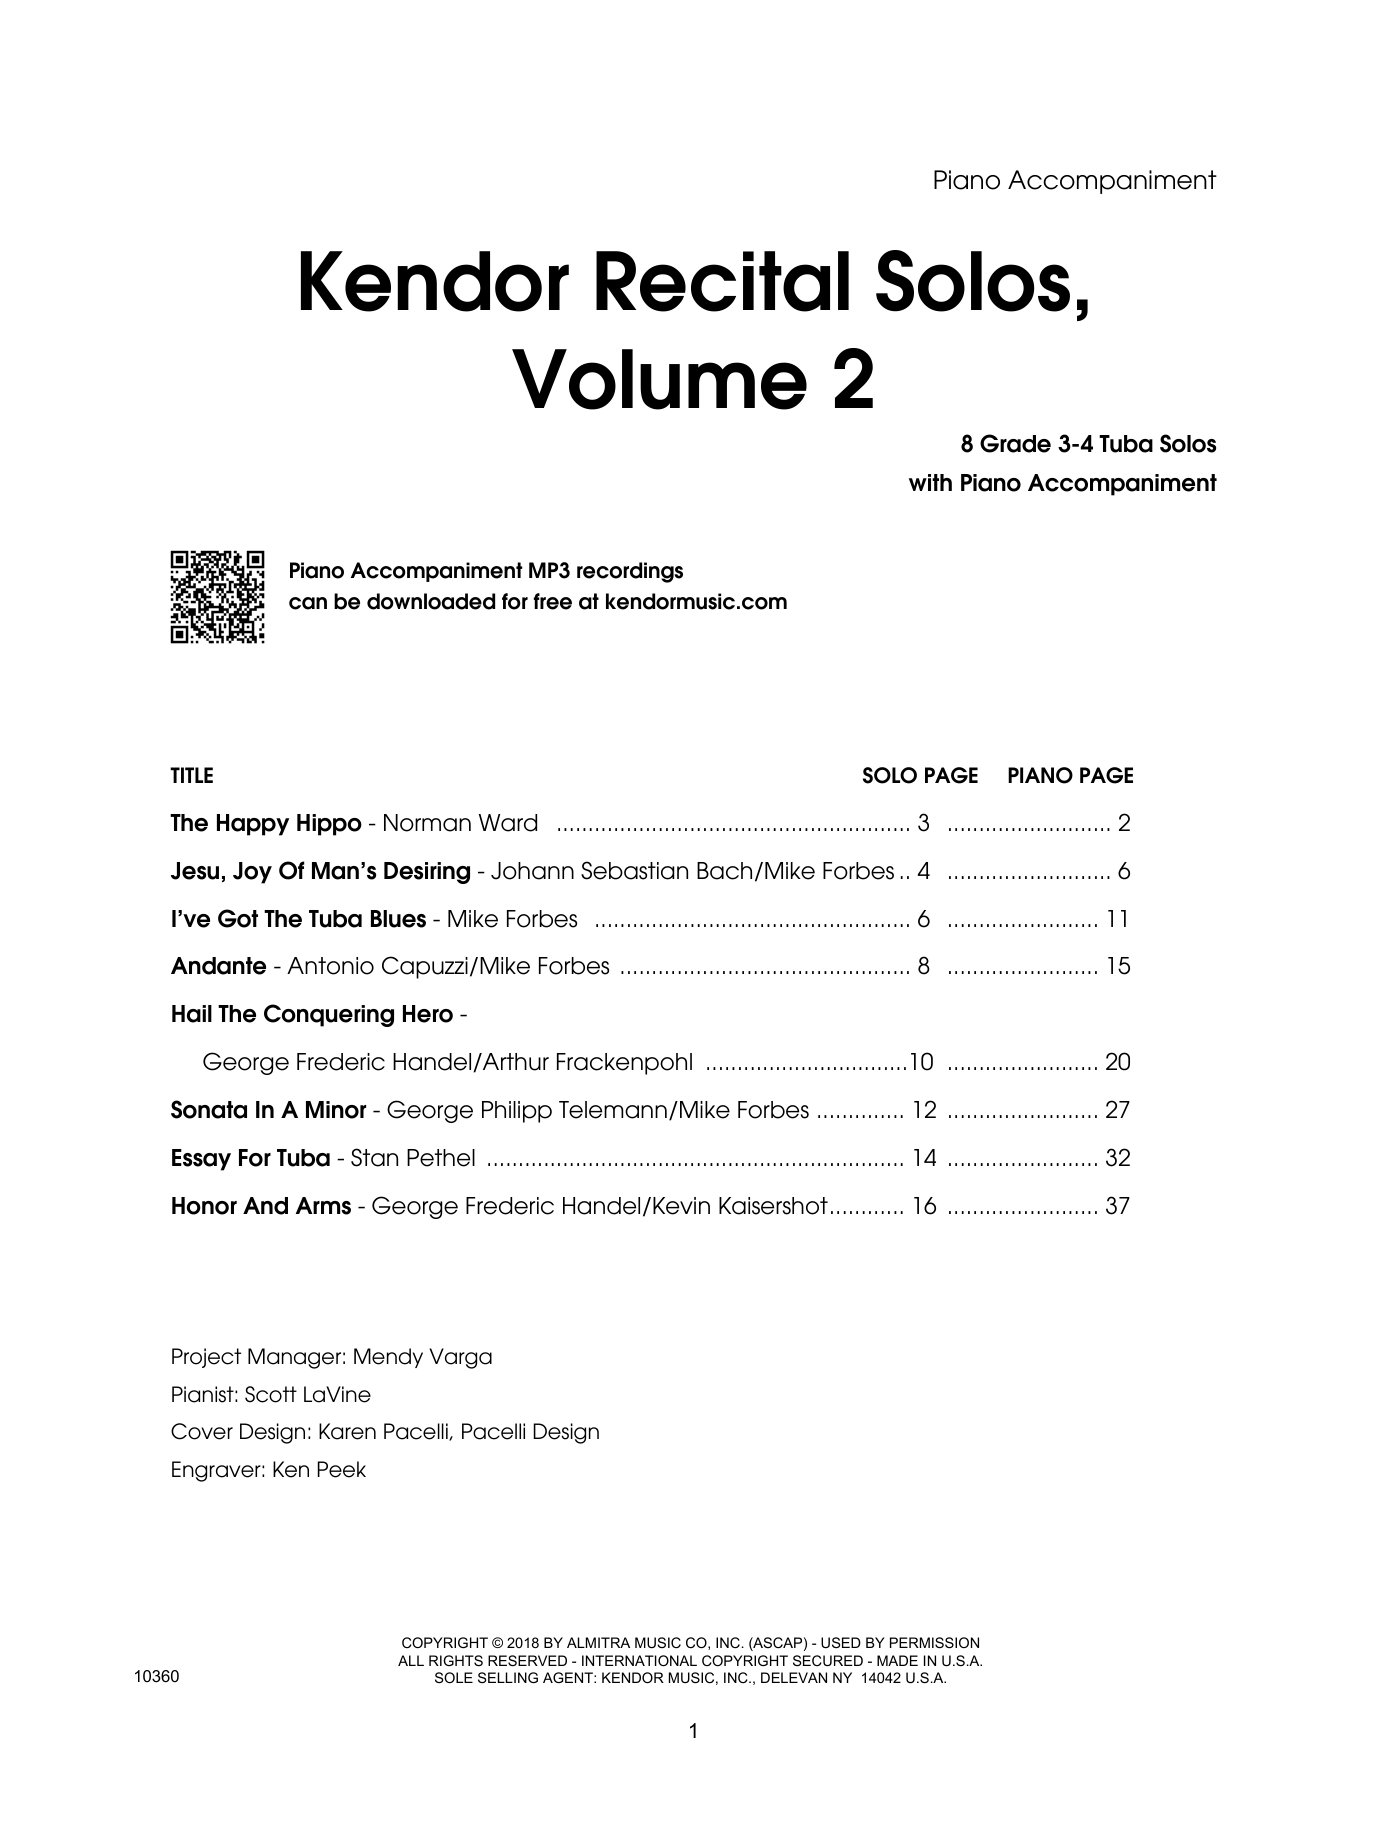 Download Various Kendor Recital Solos, Volume 2 - Tuba - Sheet Music